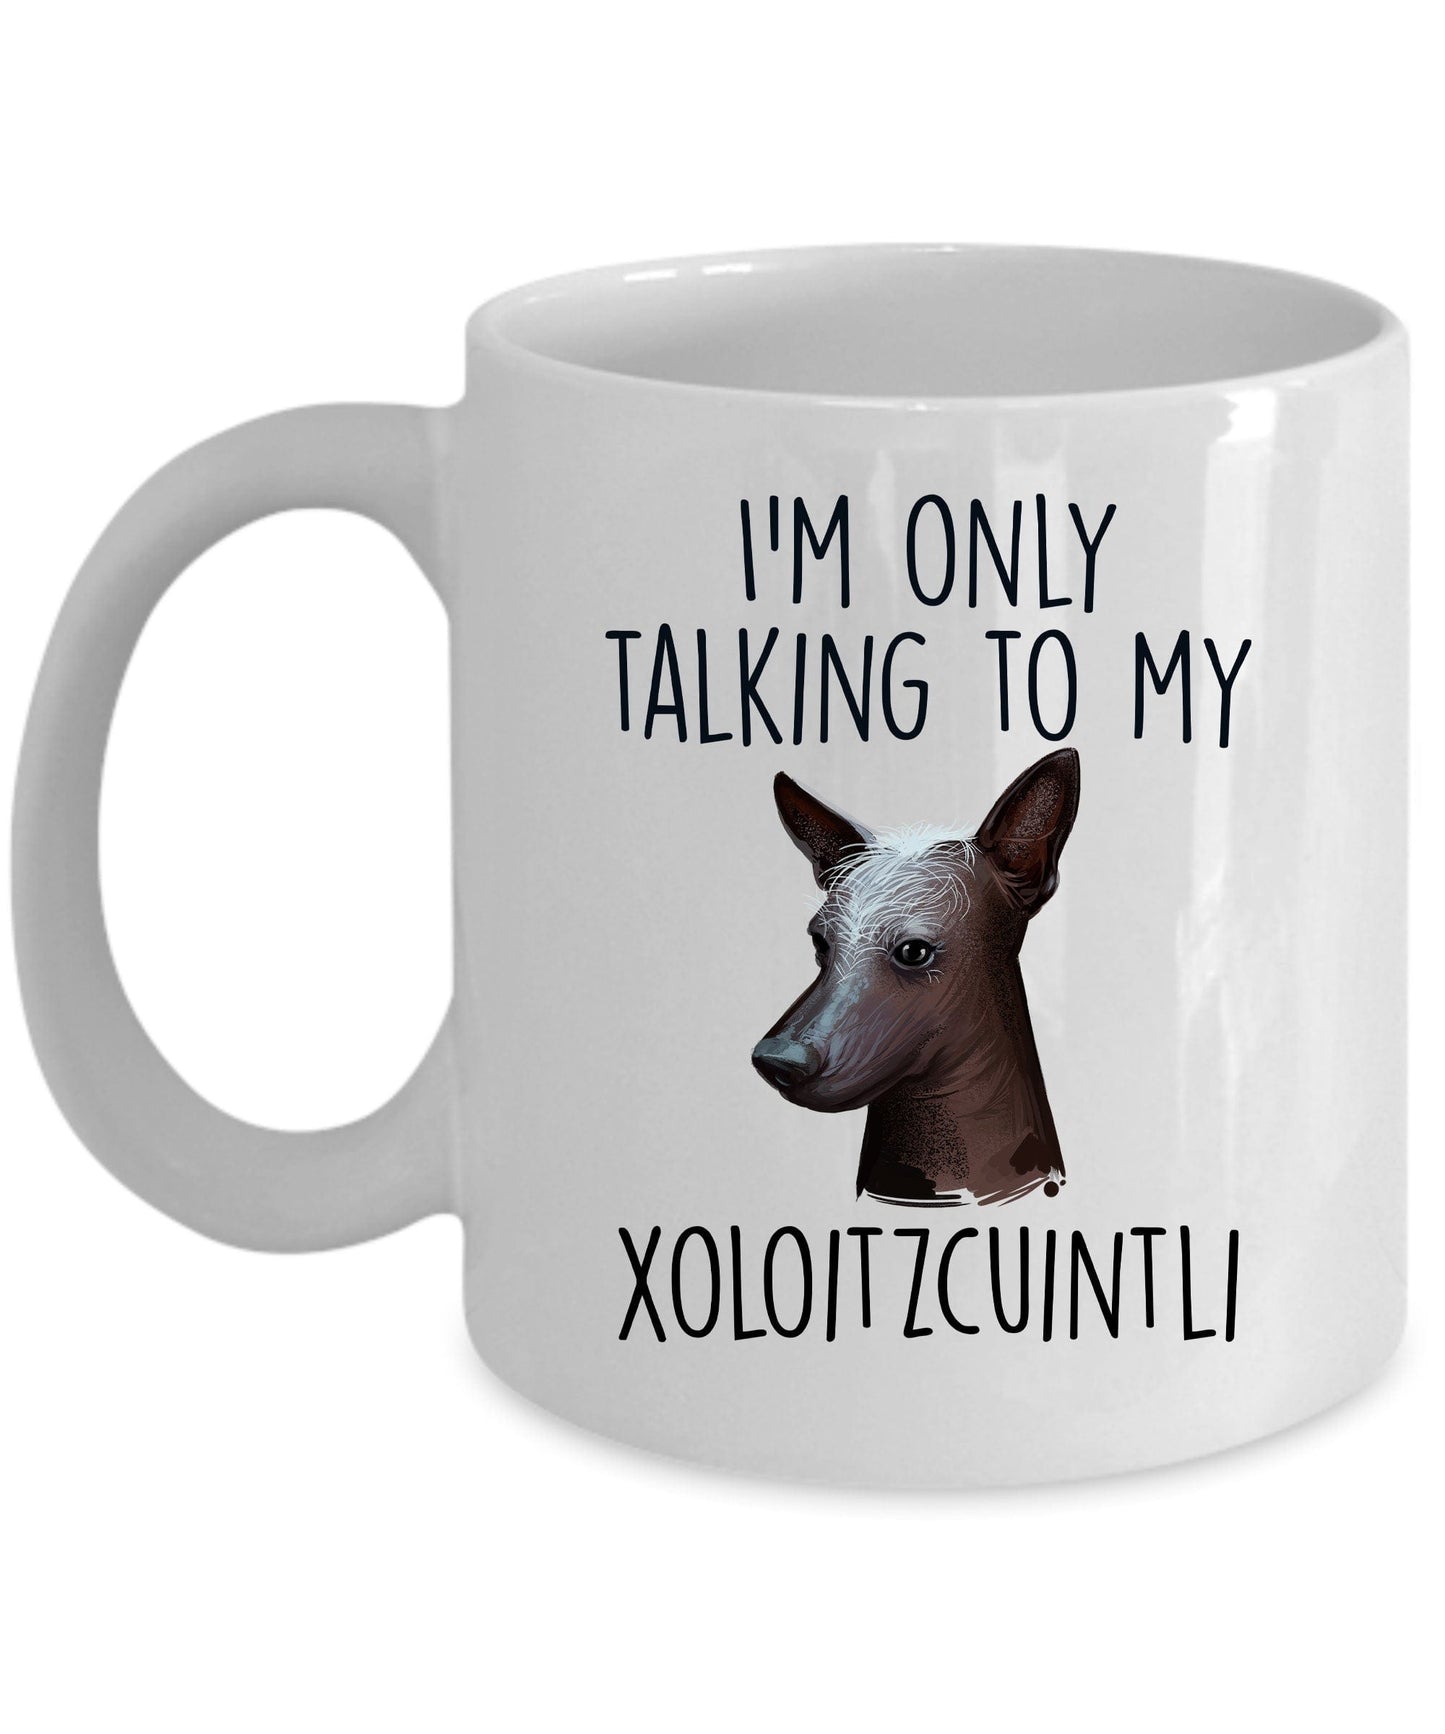 Funny Dog Coffee Mug - I'm Only Talking to my Xoloitzcuintli